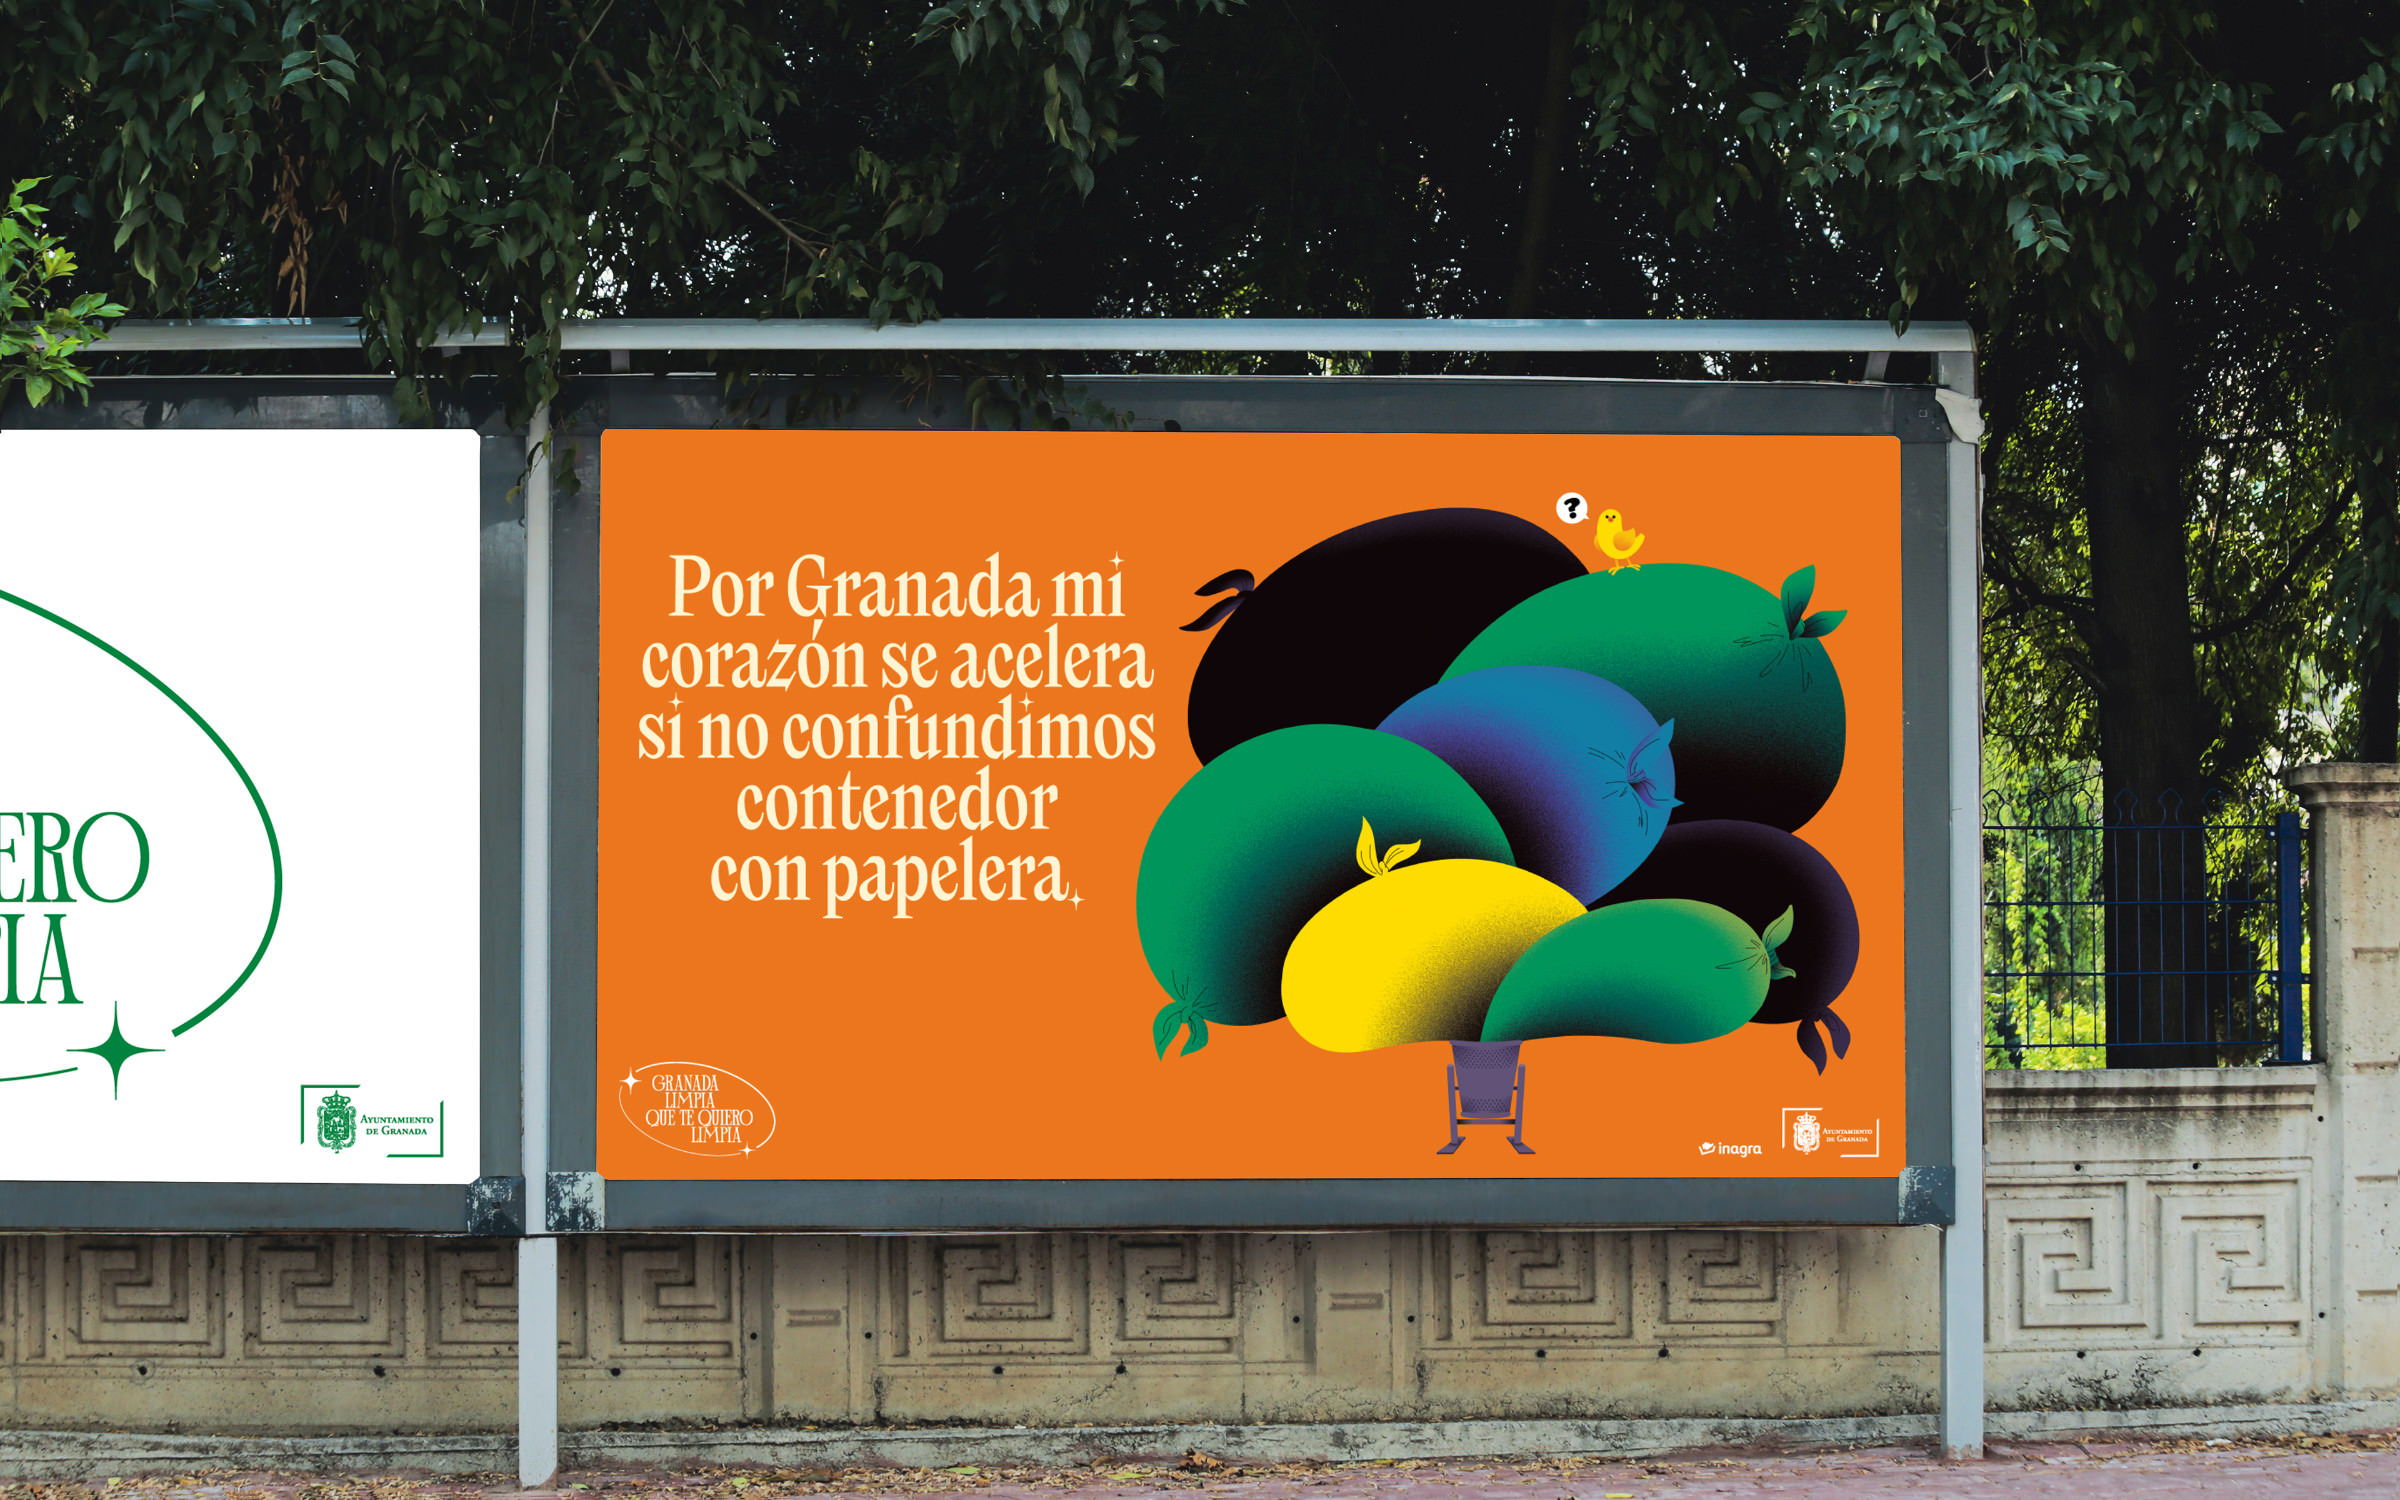 The typeface Nikolai in use for the campaign “Granada limpia que te quiero limpia” (English: Clean Granada, I love you clean)